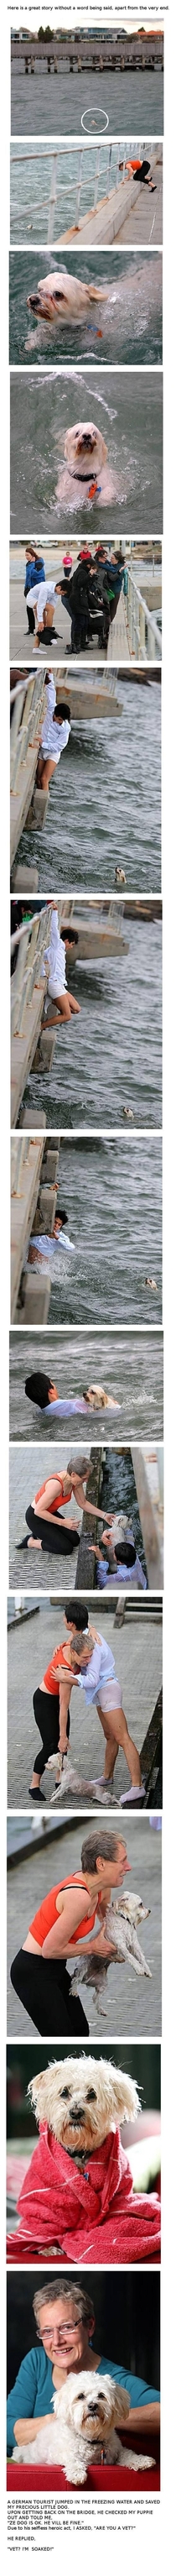 Man rescues dog